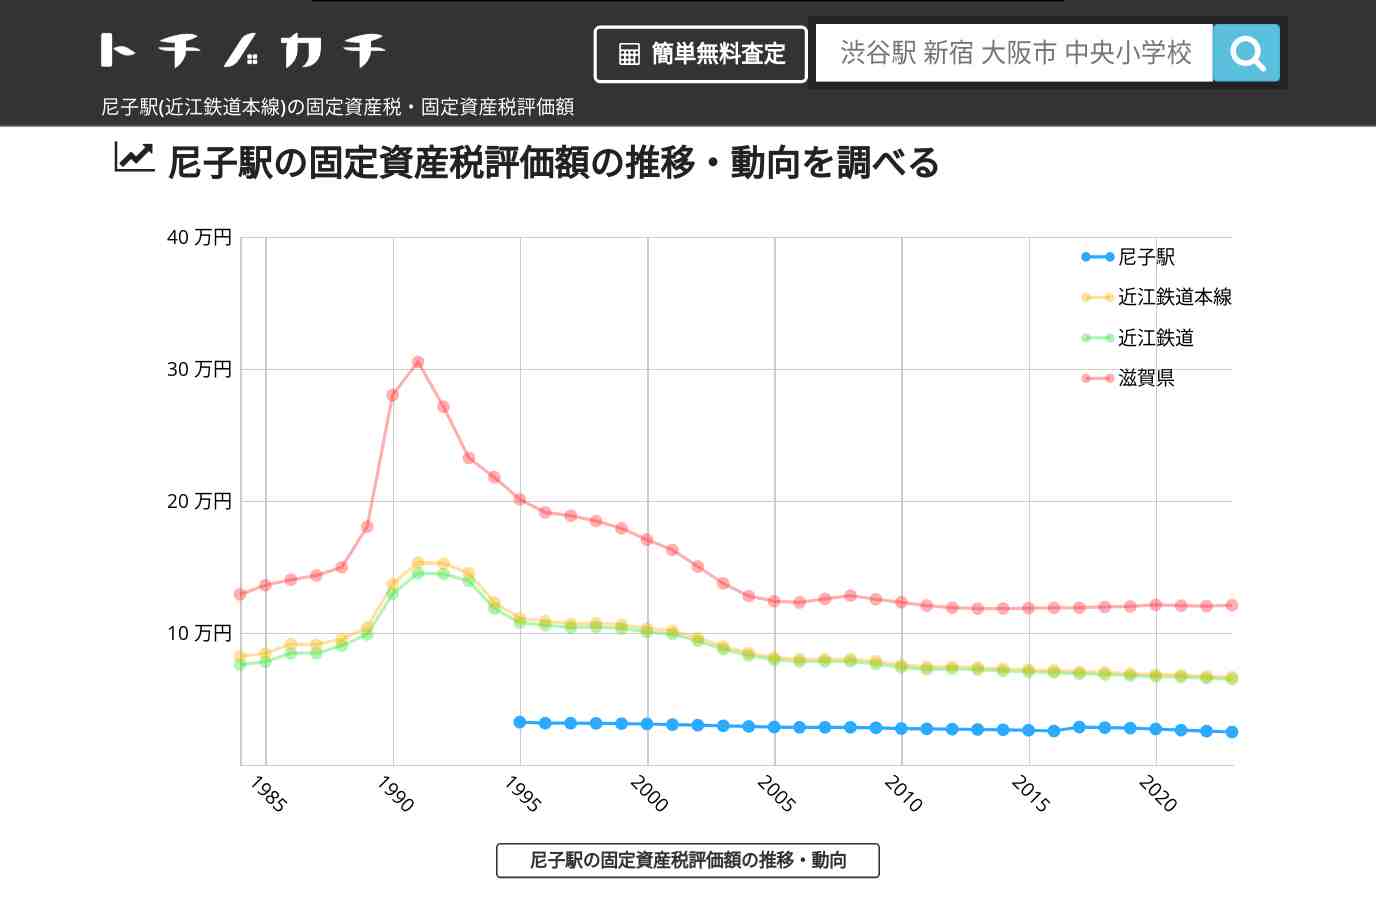 尼子駅(近江鉄道本線)の固定資産税・固定資産税評価額 | トチノカチ